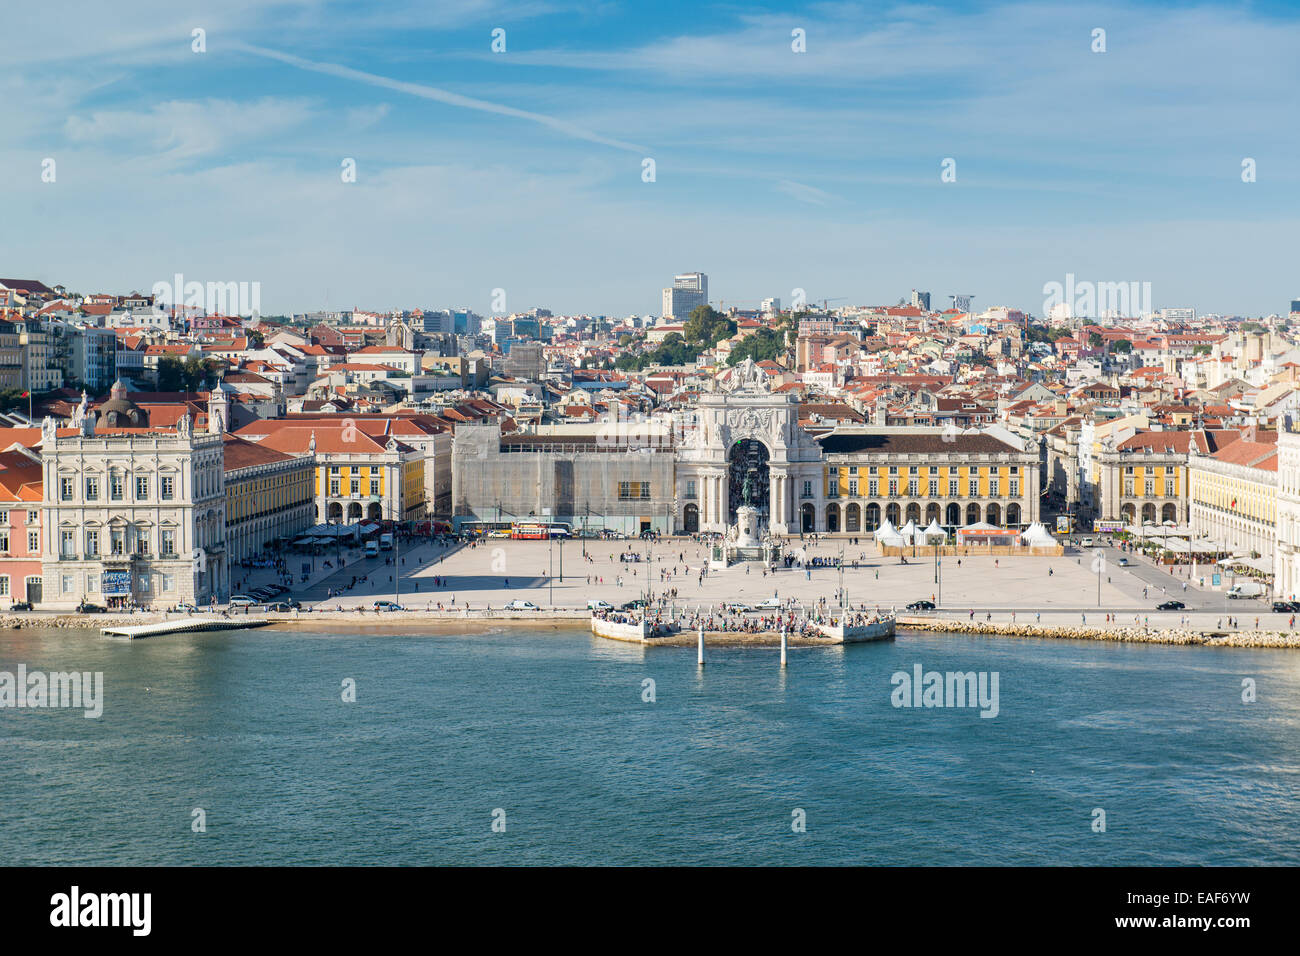 A view over Praça do Comércio (Commerce Square) in Lisbon, Portugal. Stock Photo